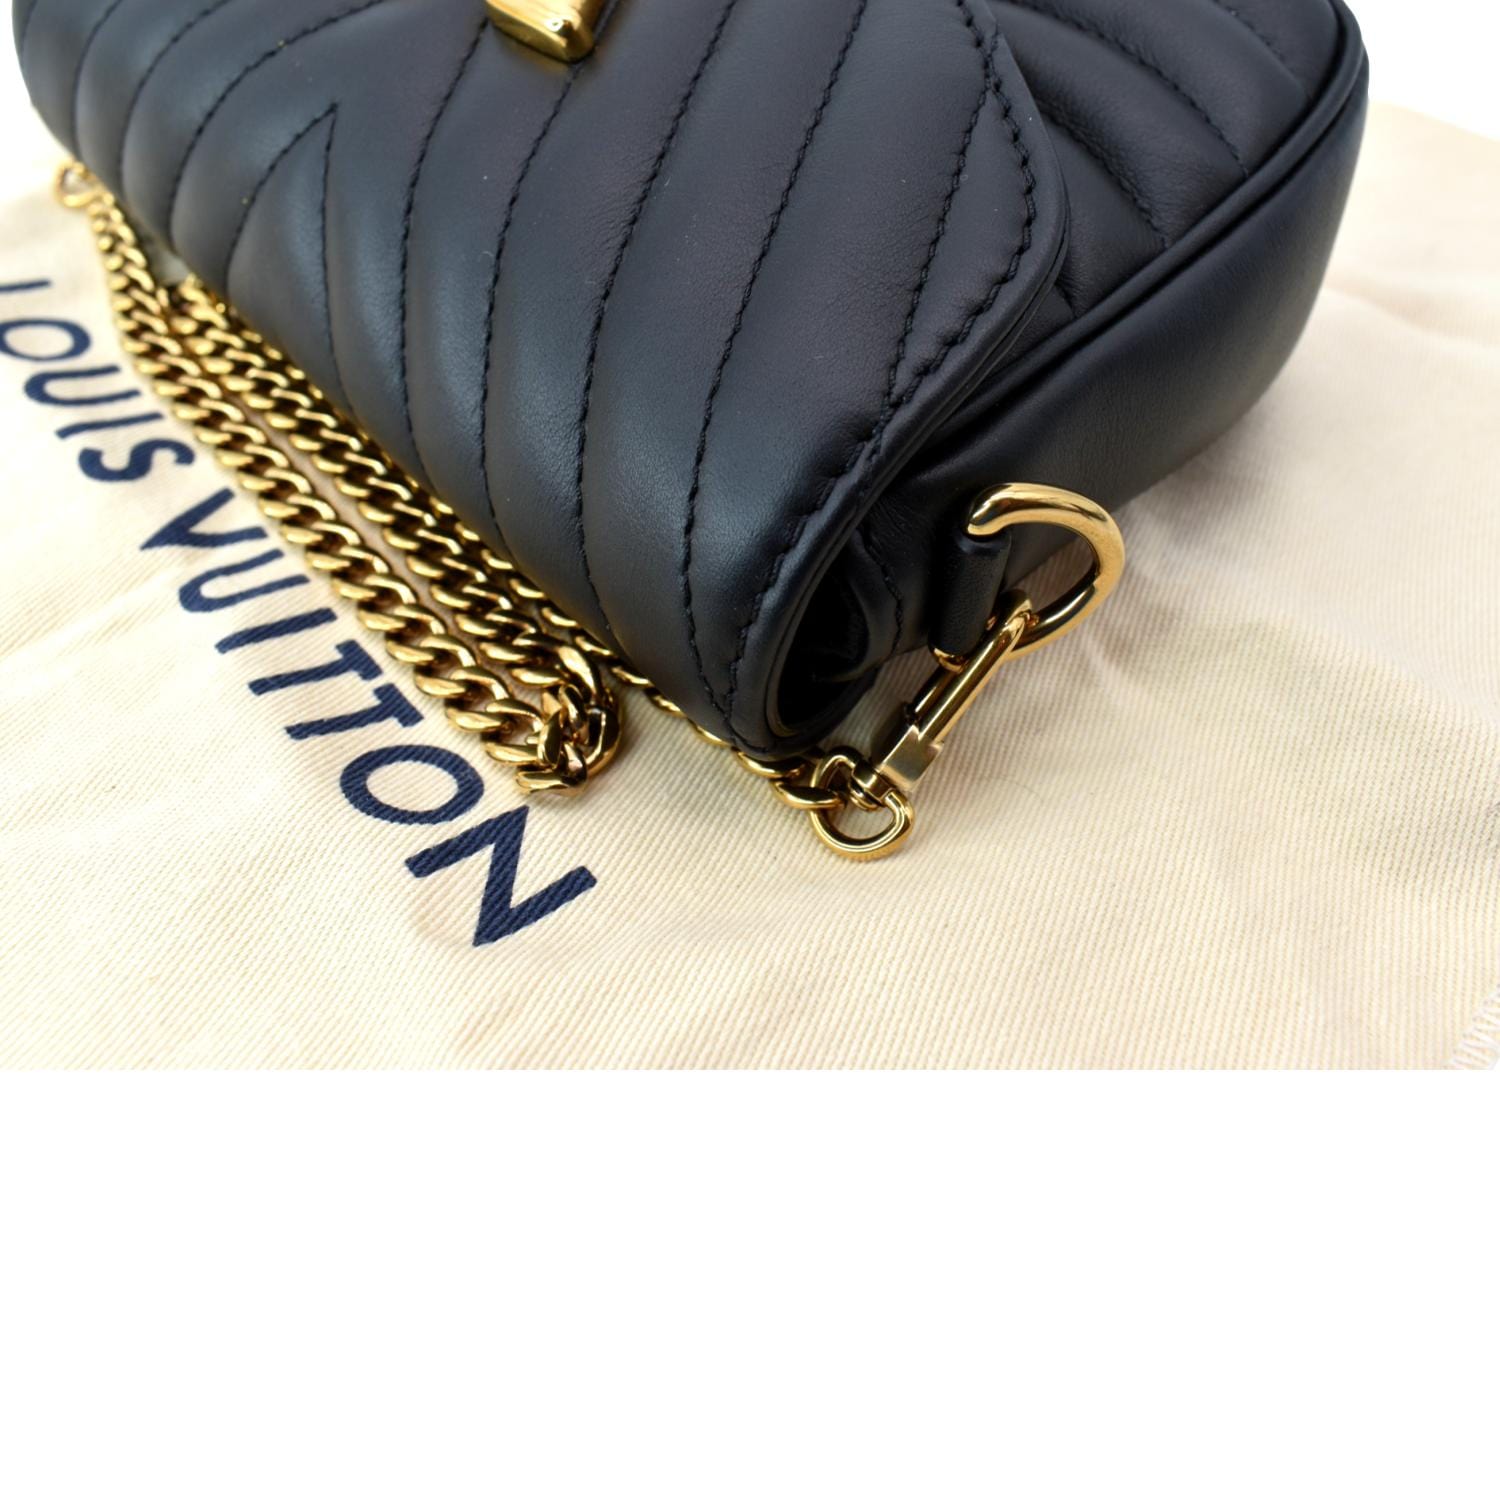 FWRD Renew Louis Vuitton Multicolor Pochette Accessories Shoulder Bag in  Multi